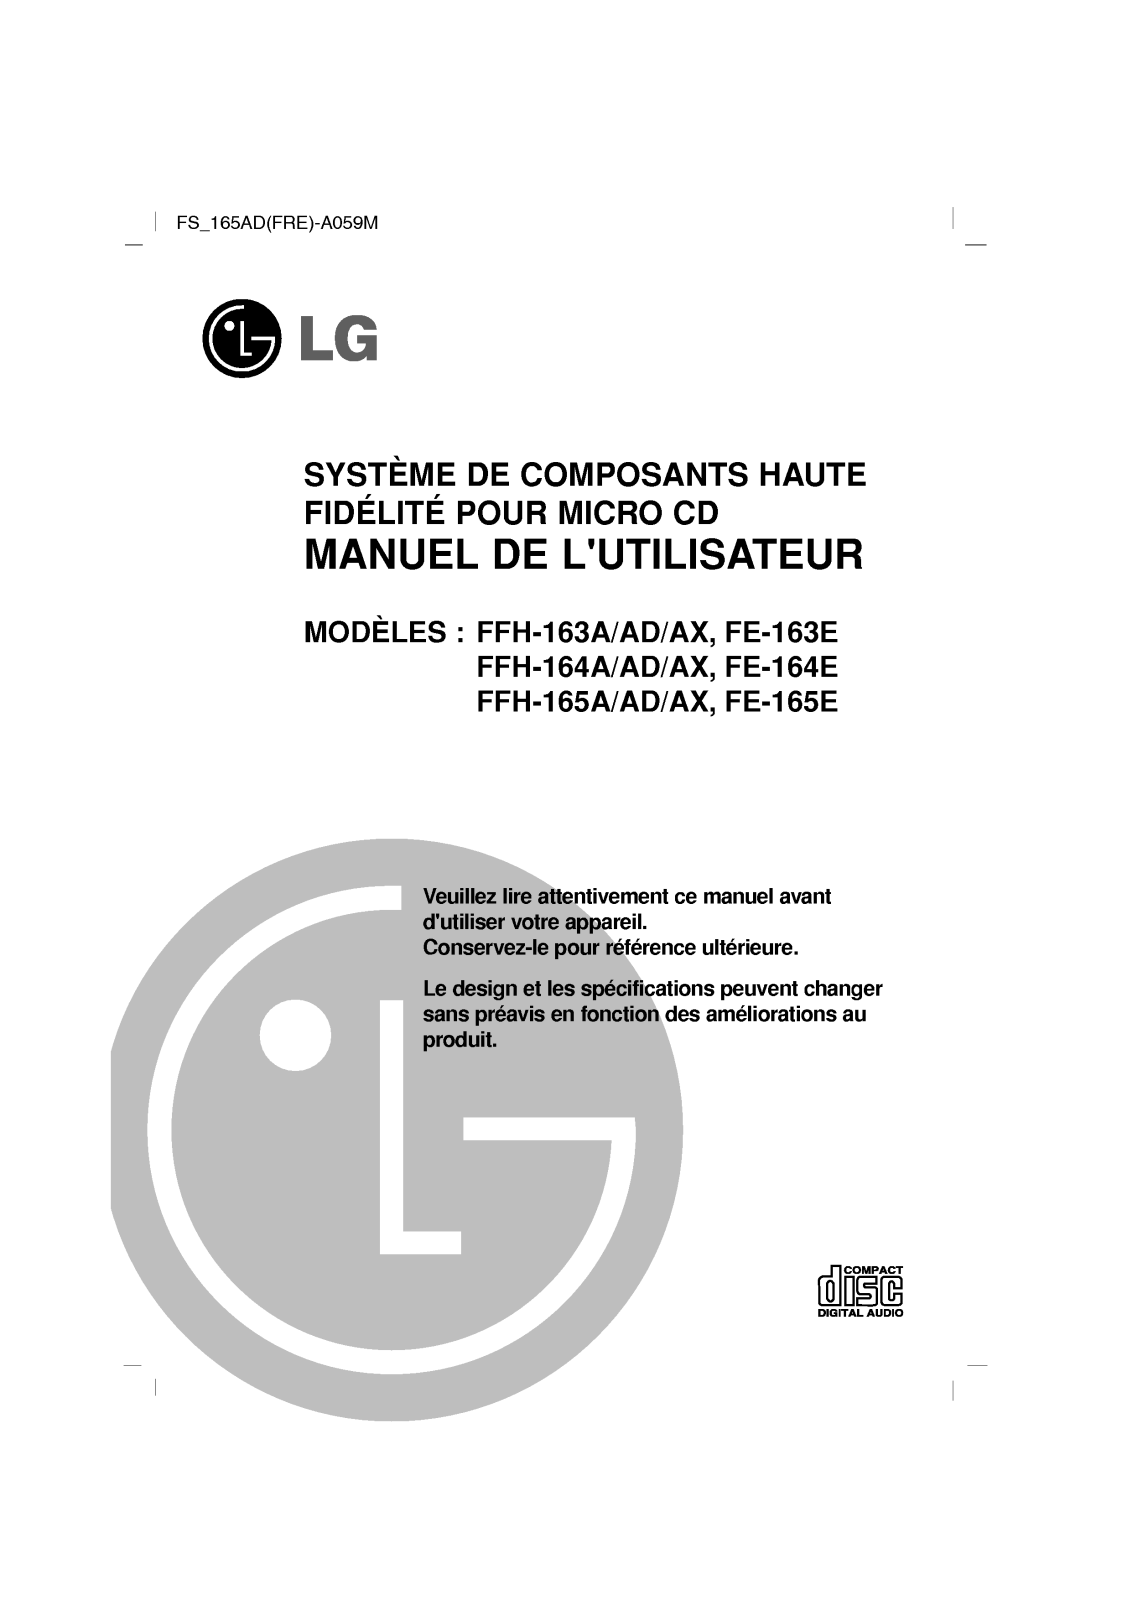 LG FFH-165AD User Manual